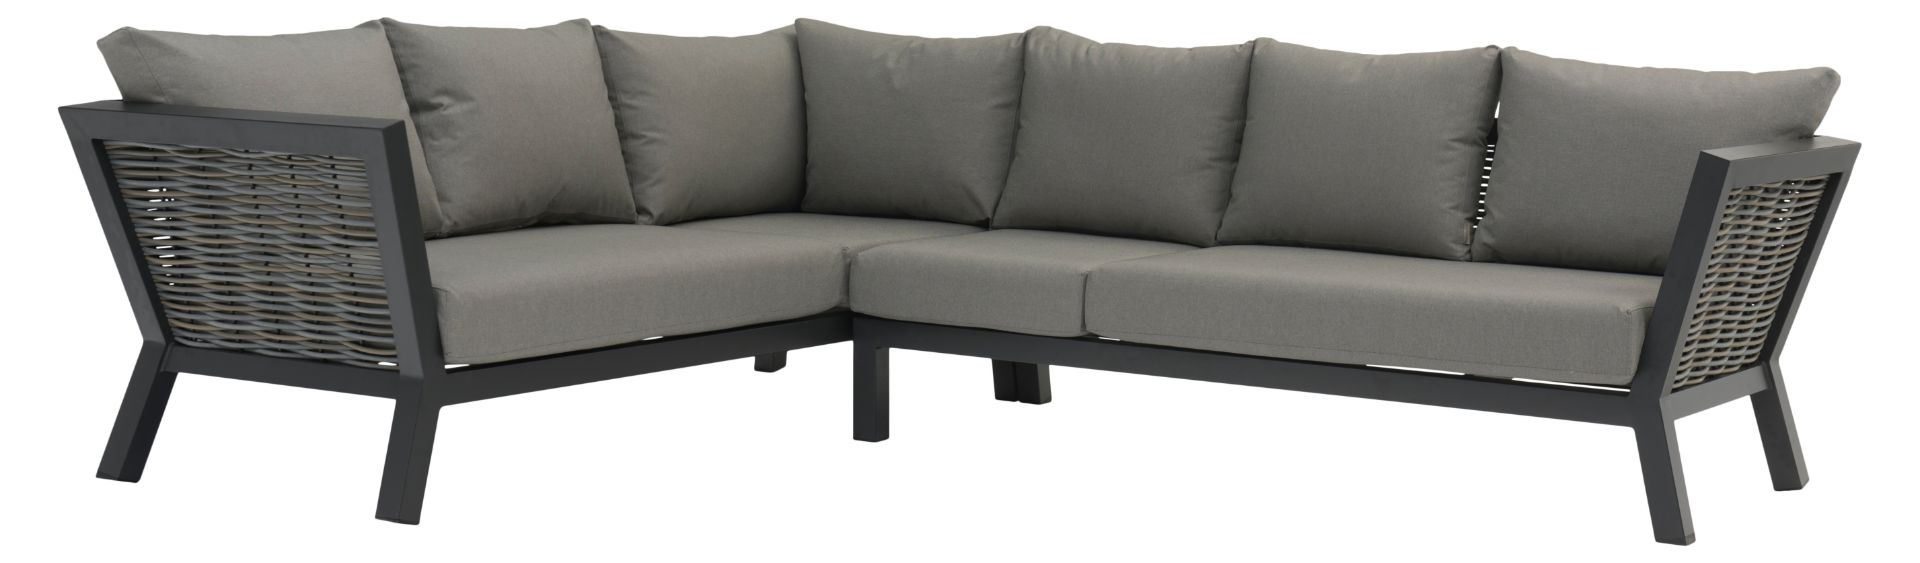 Set A405 Tuscan Wicker Rectangle Modular Sofa & Bench - Image 2 of 2